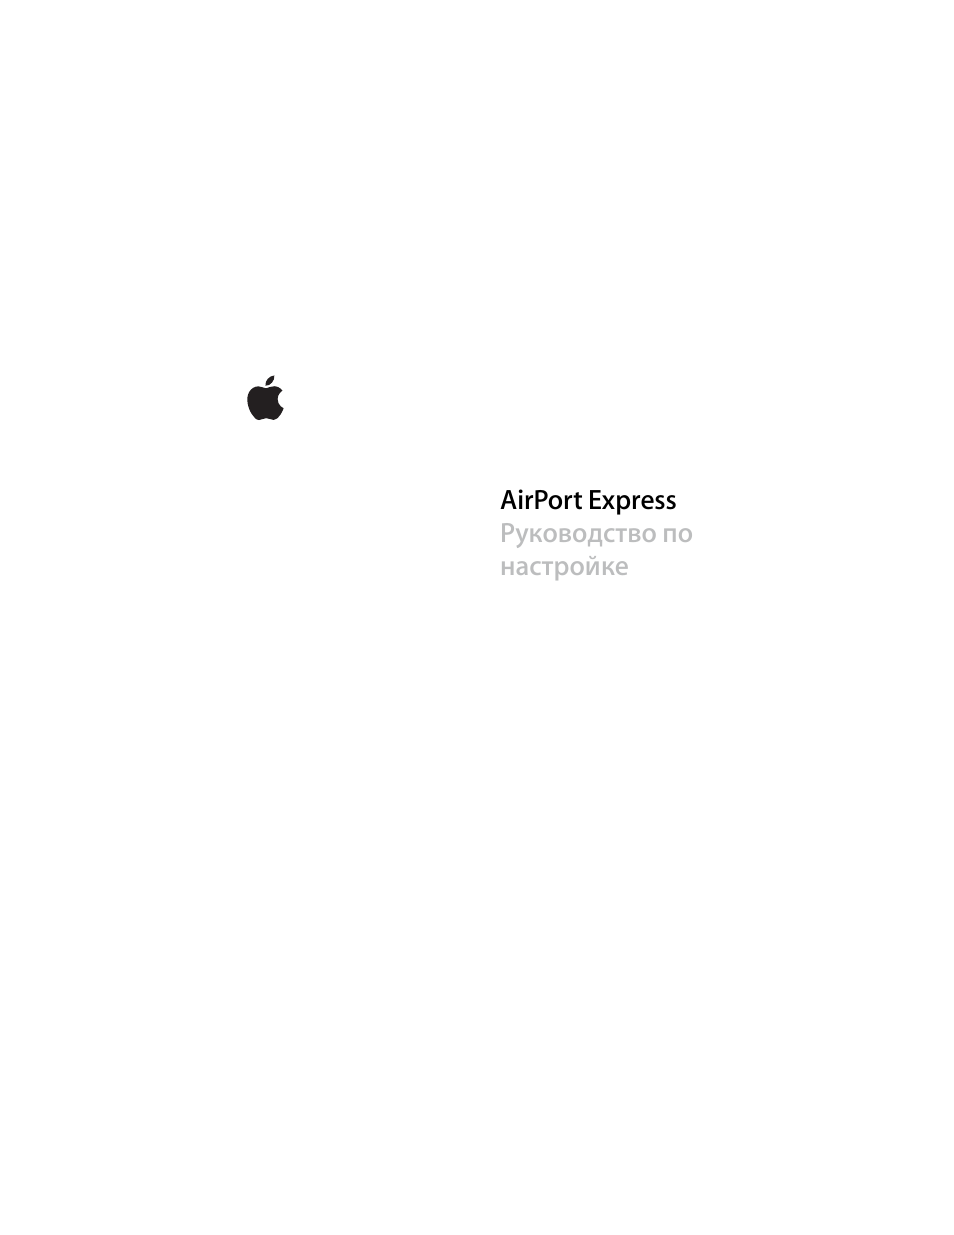 Инструкция по эксплуатации Apple AirPort Express 802.11n (1st Generation) | 48 страниц